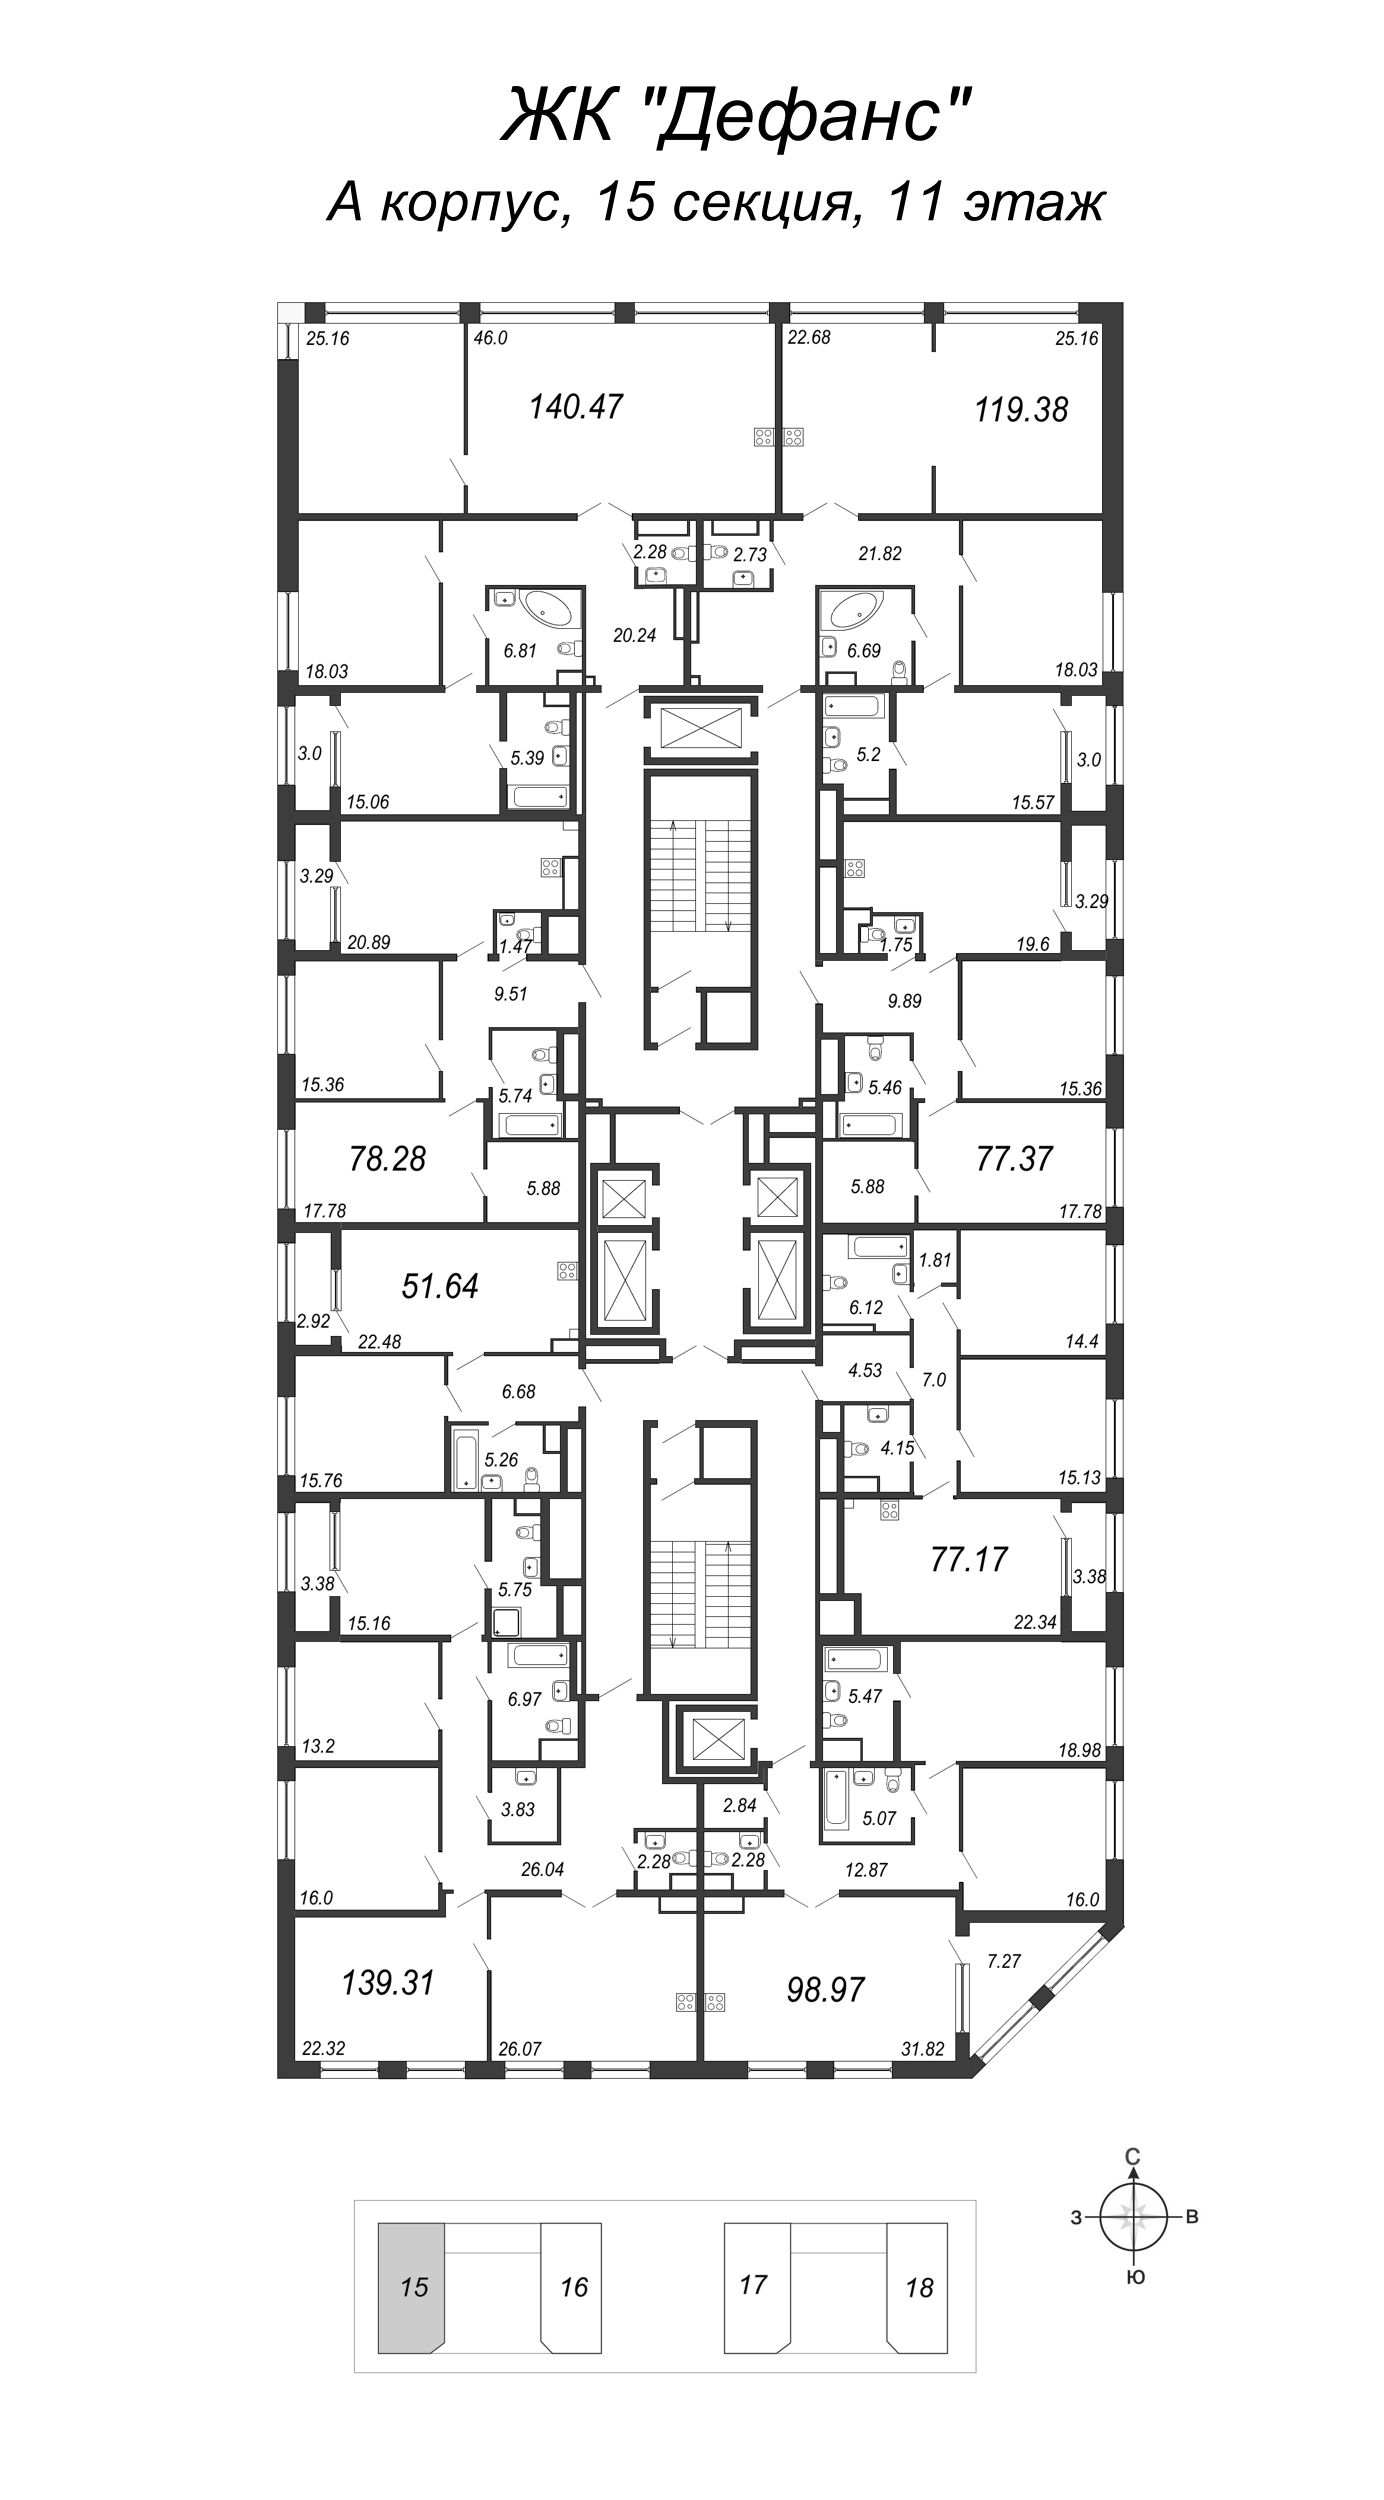 4-комнатная (Евро) квартира, 140.47 м² - планировка этажа